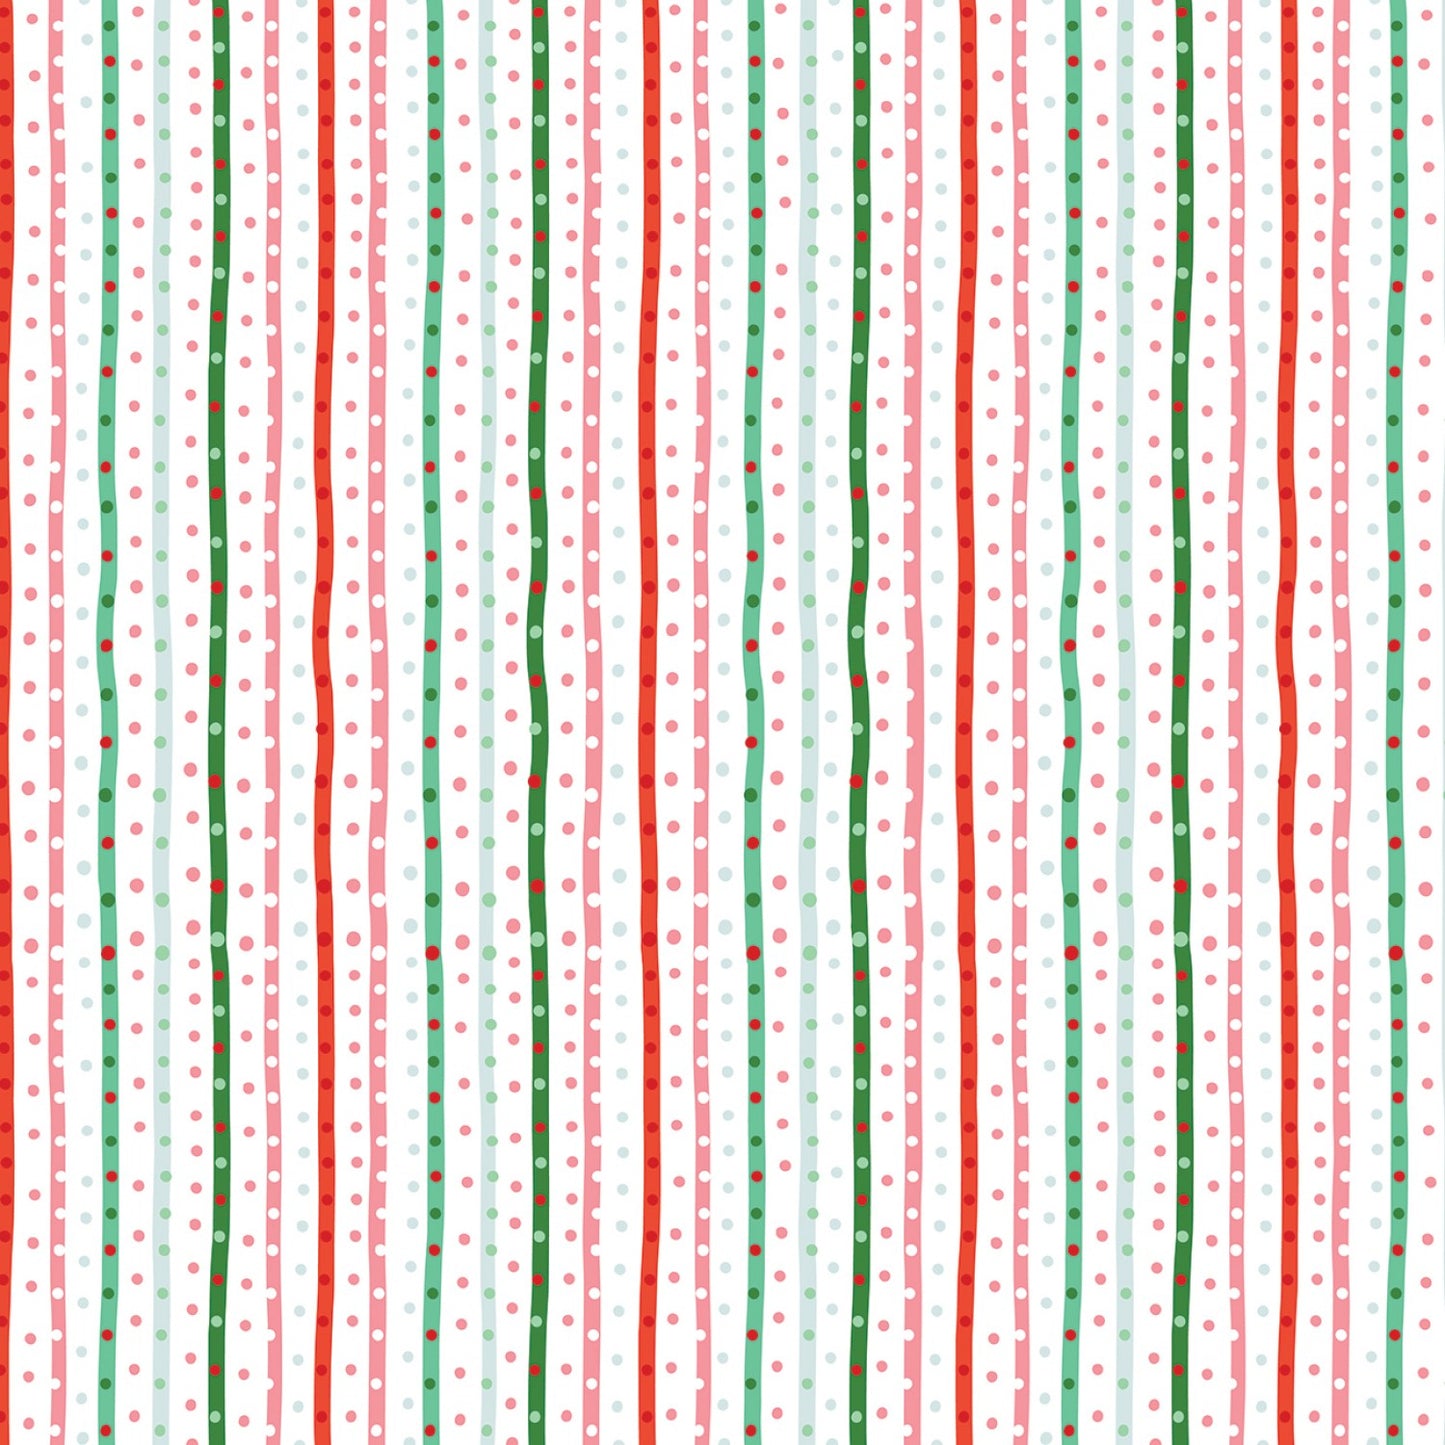 Manufacturer: Riley Blake Designs Designer: Jill Howarth Collection: Twas Print Name: Sugarplum Stripe in Multi Material: 100% Cotton Weight: Quilting SKU: SC13465R-MULTI Width: 44 inches